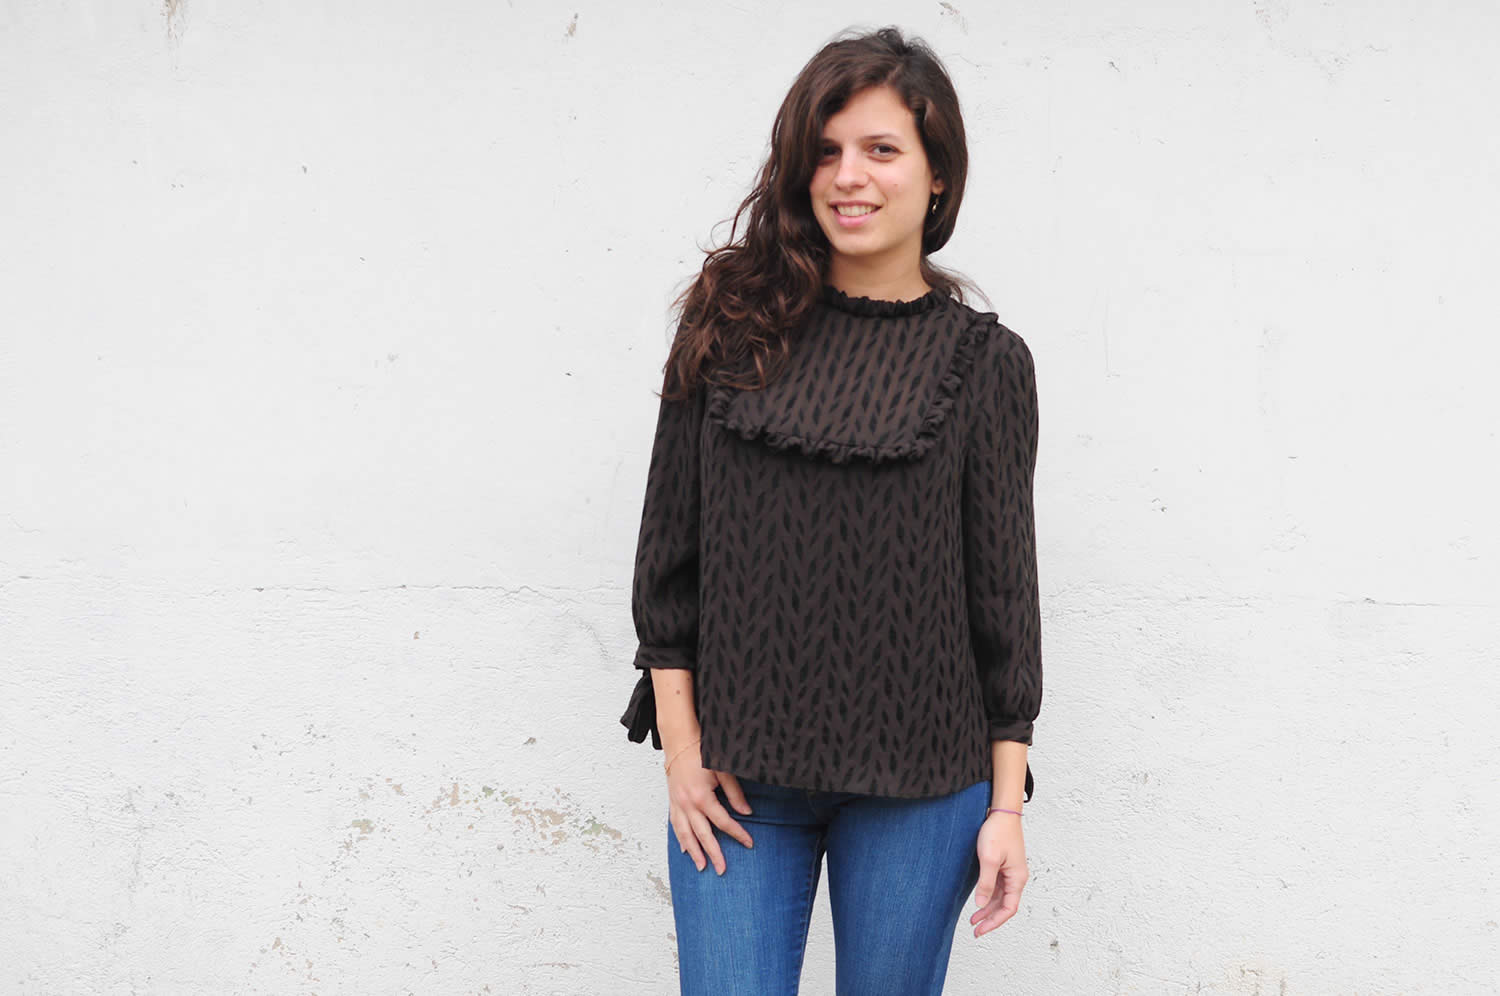 Ladulsatina - Sewing blog - Blog di cucito - Jolanda blusa by Atelier Vicolo n 6 in silk viscose blend - Front